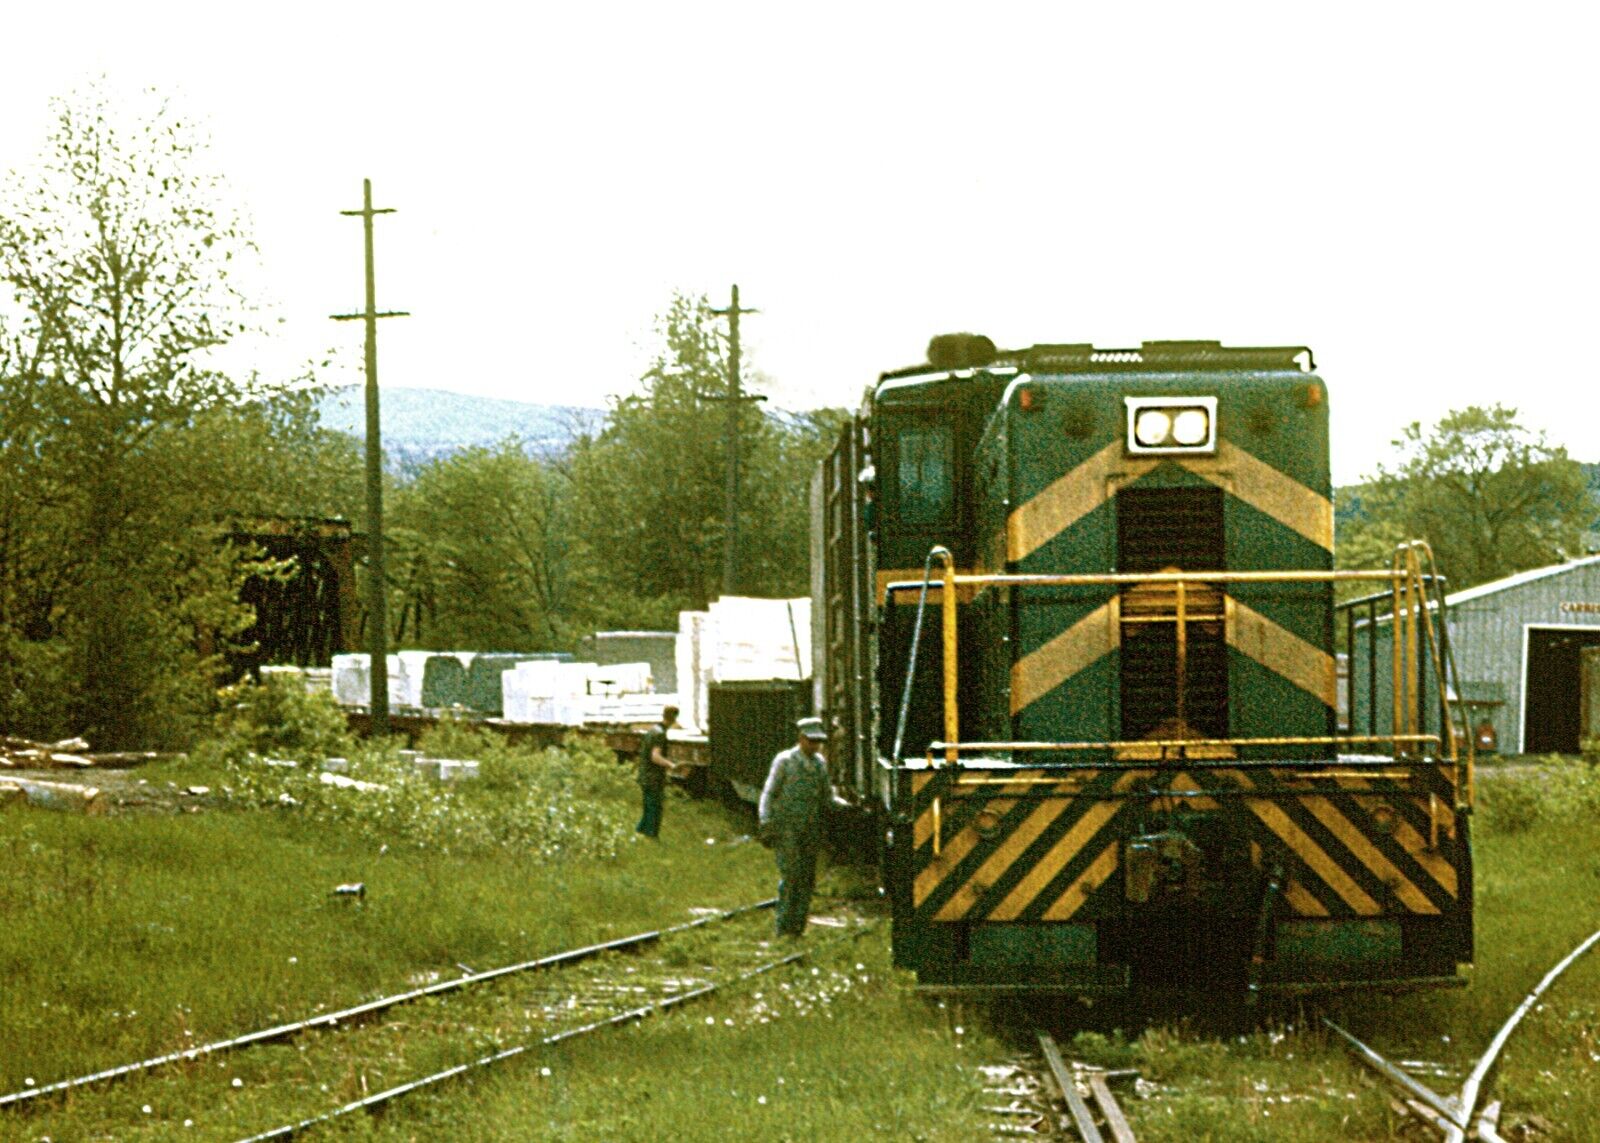 Clarendon & Pittsford 500 W Rutland Vt. May 1969 marble train 8x10\